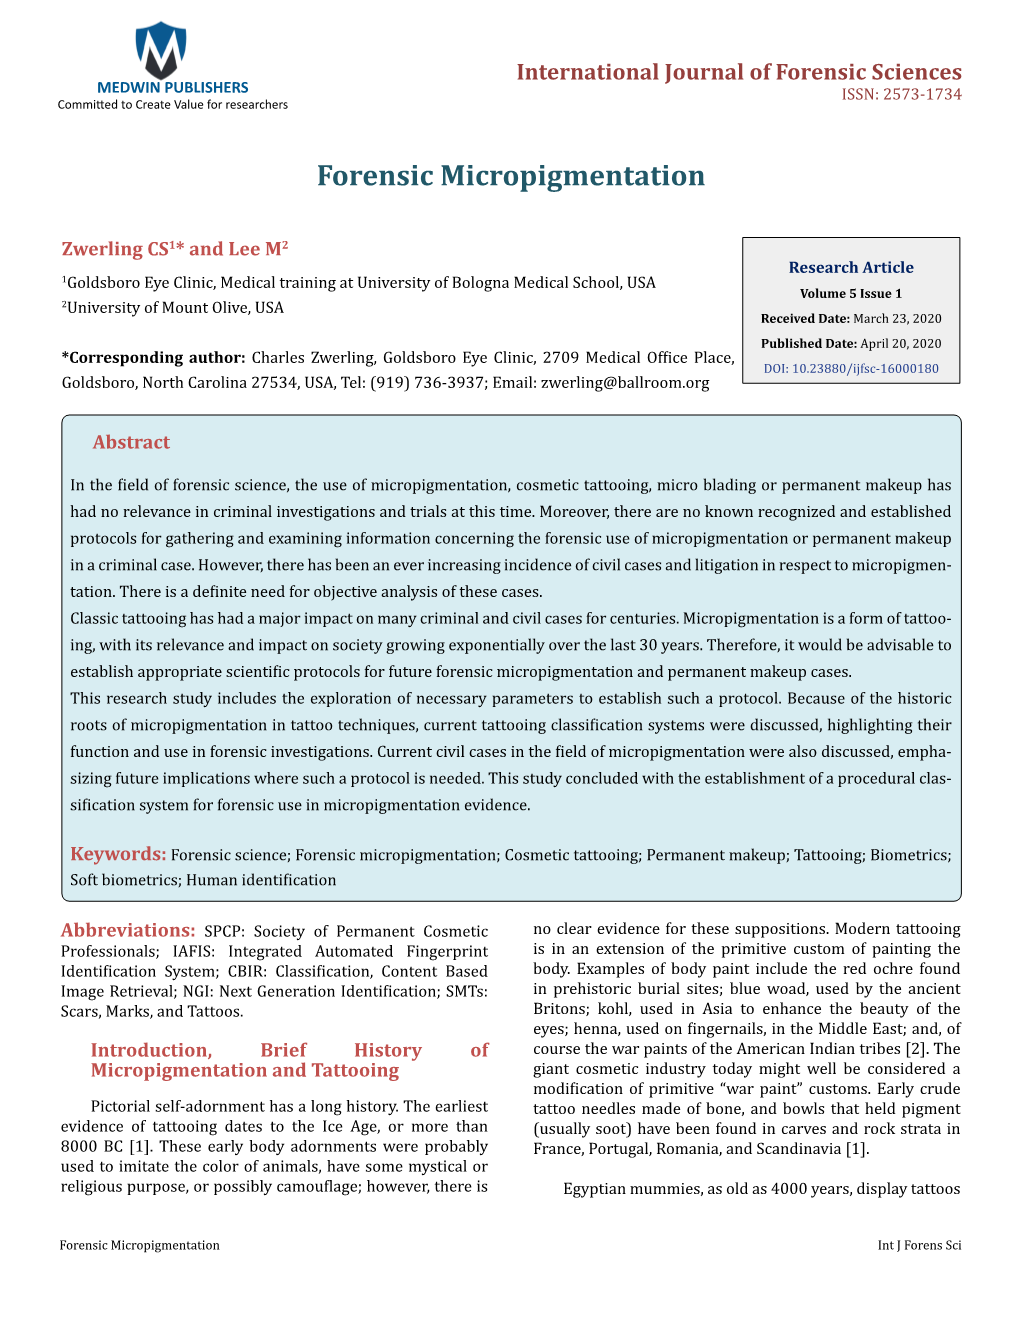 Forensic Micropigmentation